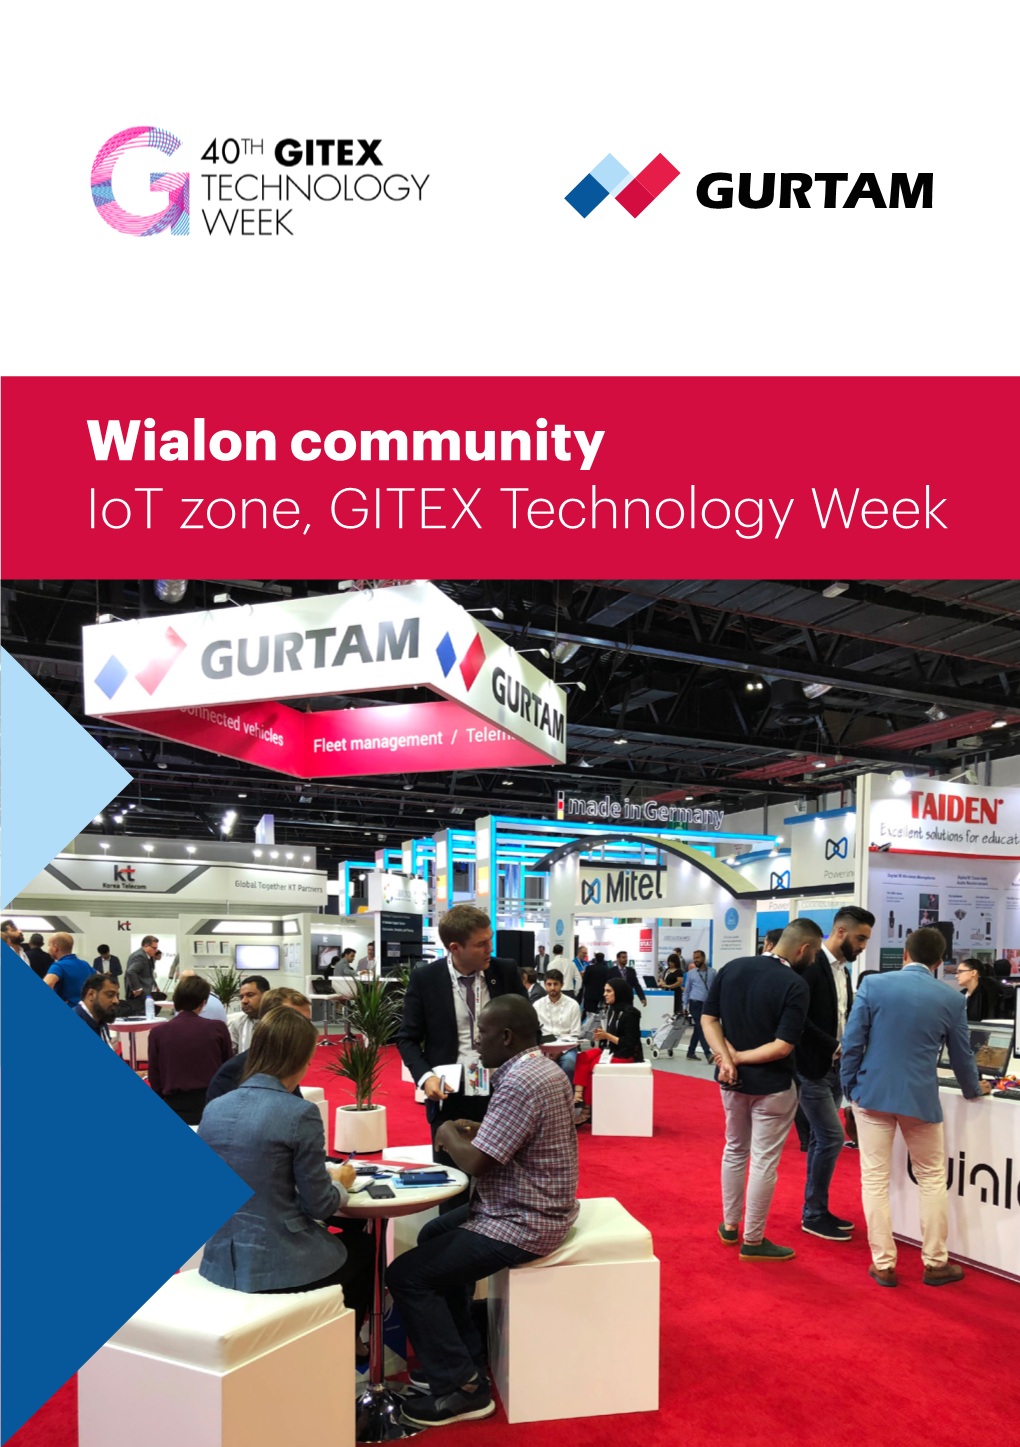 Wialon Community Iot Zone, GITEX Technology Week Gurtam Iot Zone the FLOOR PLAN FLOOR the #Z2-B10, Zabeel Hall #Z2-B10